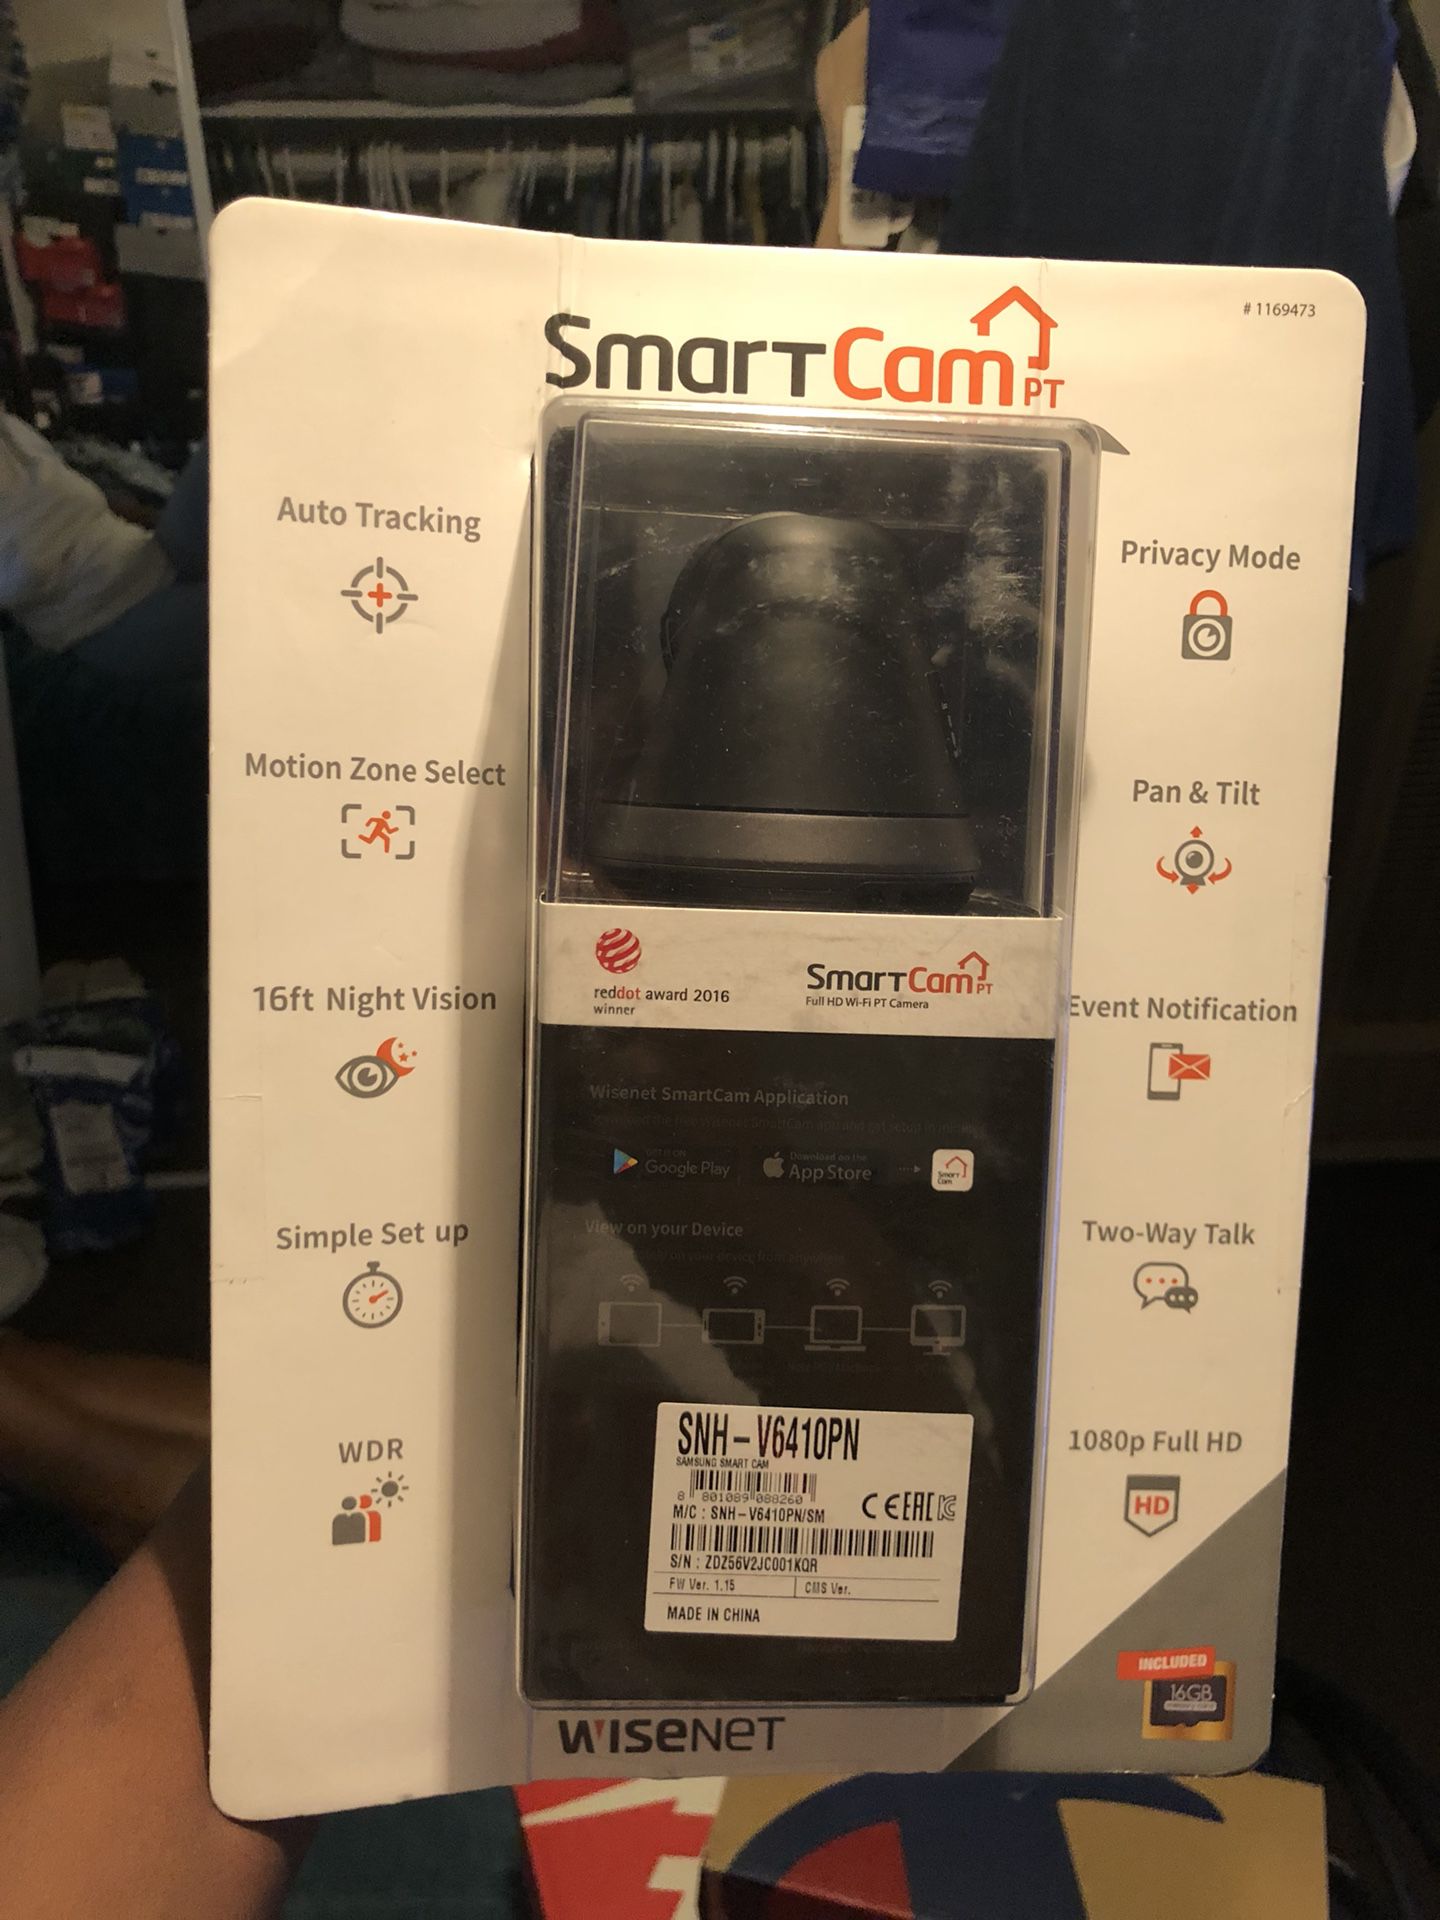 Smart Cam pt